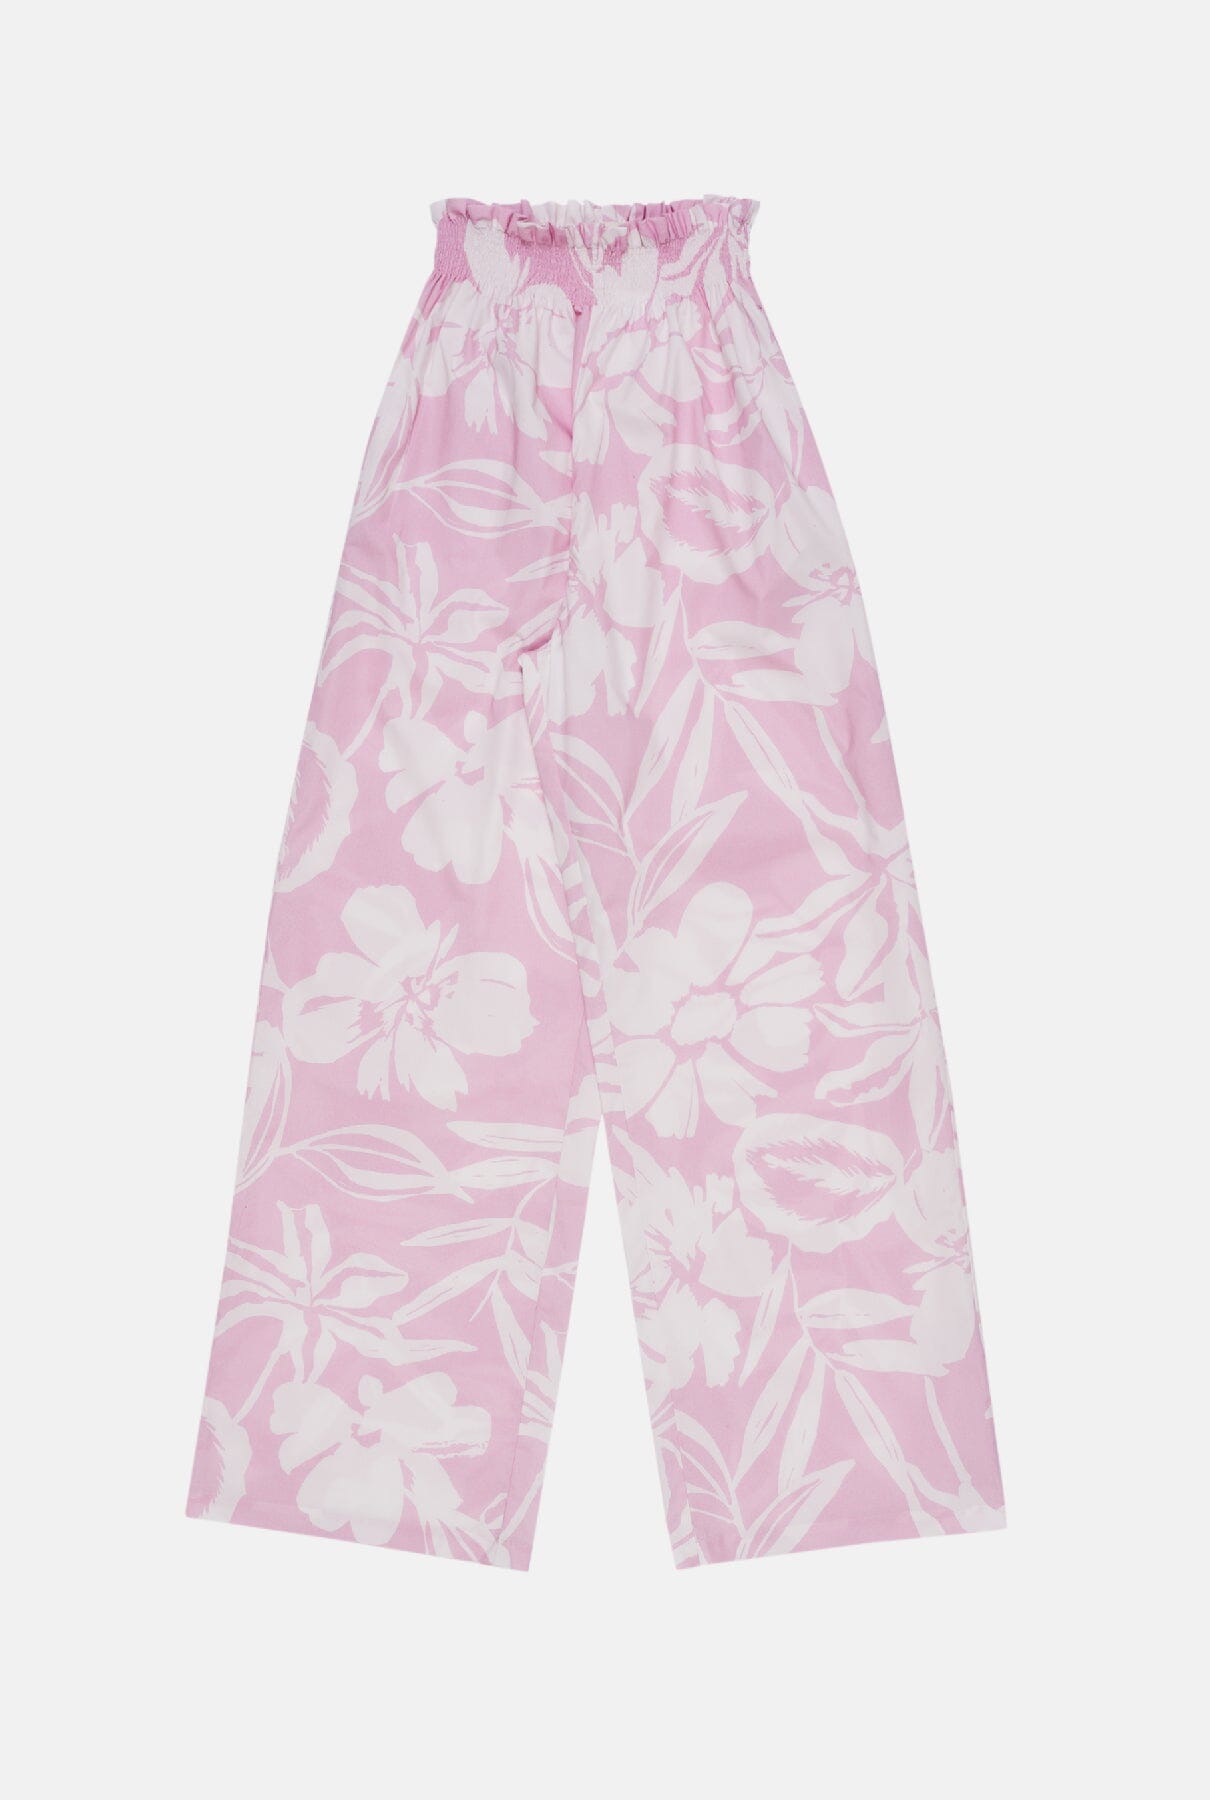 Desert Woman Pant tDesert Print Lilac Trousers The New Society 